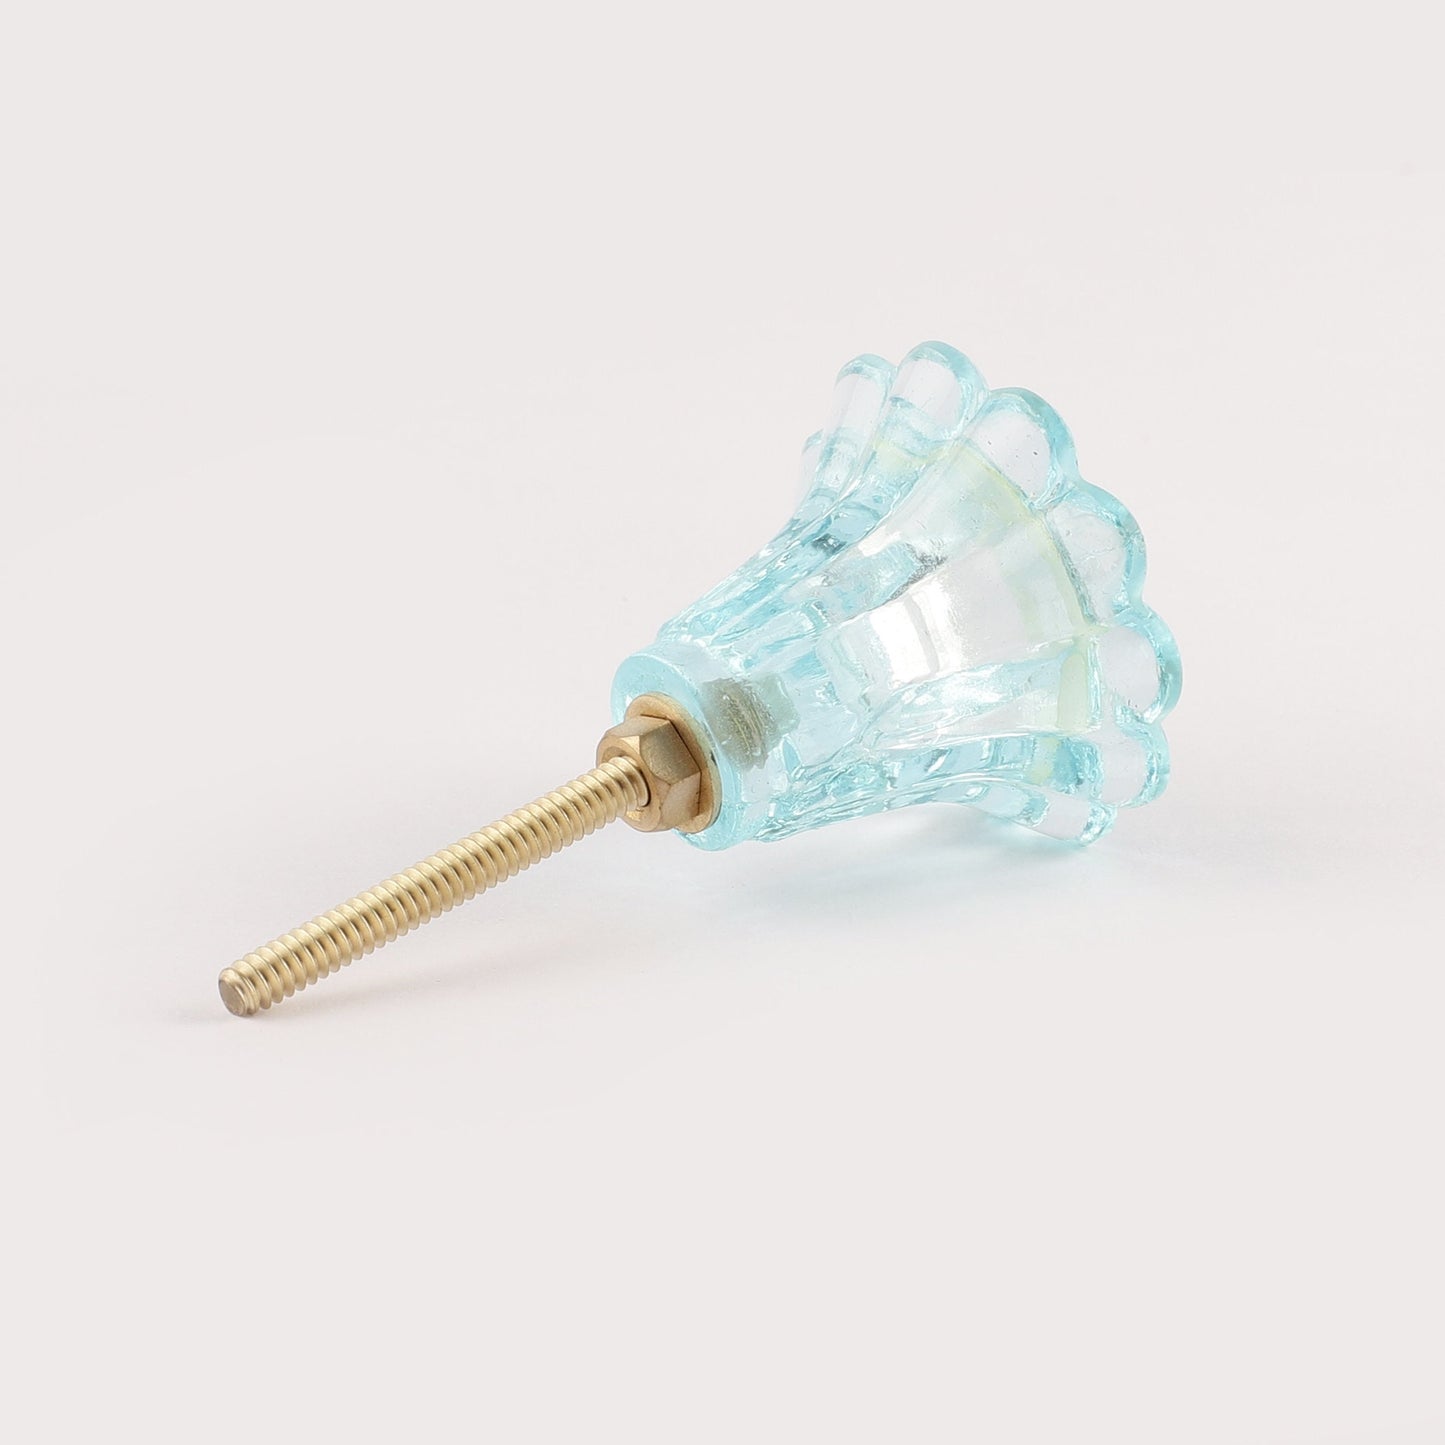 Aqua Glass Floral Pull Knobs (G14)